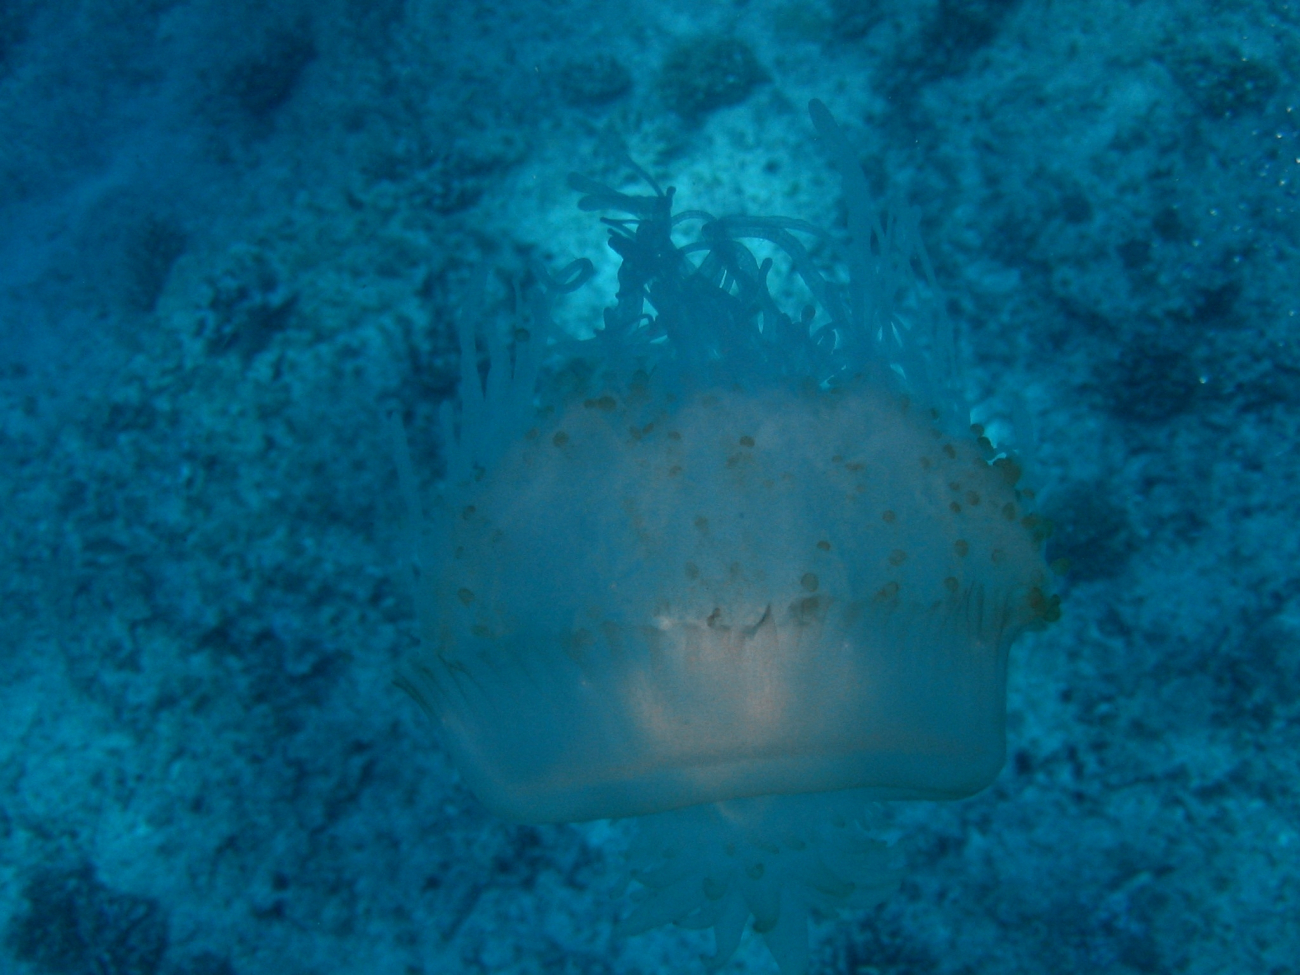 Jellyfish, a cnidarian